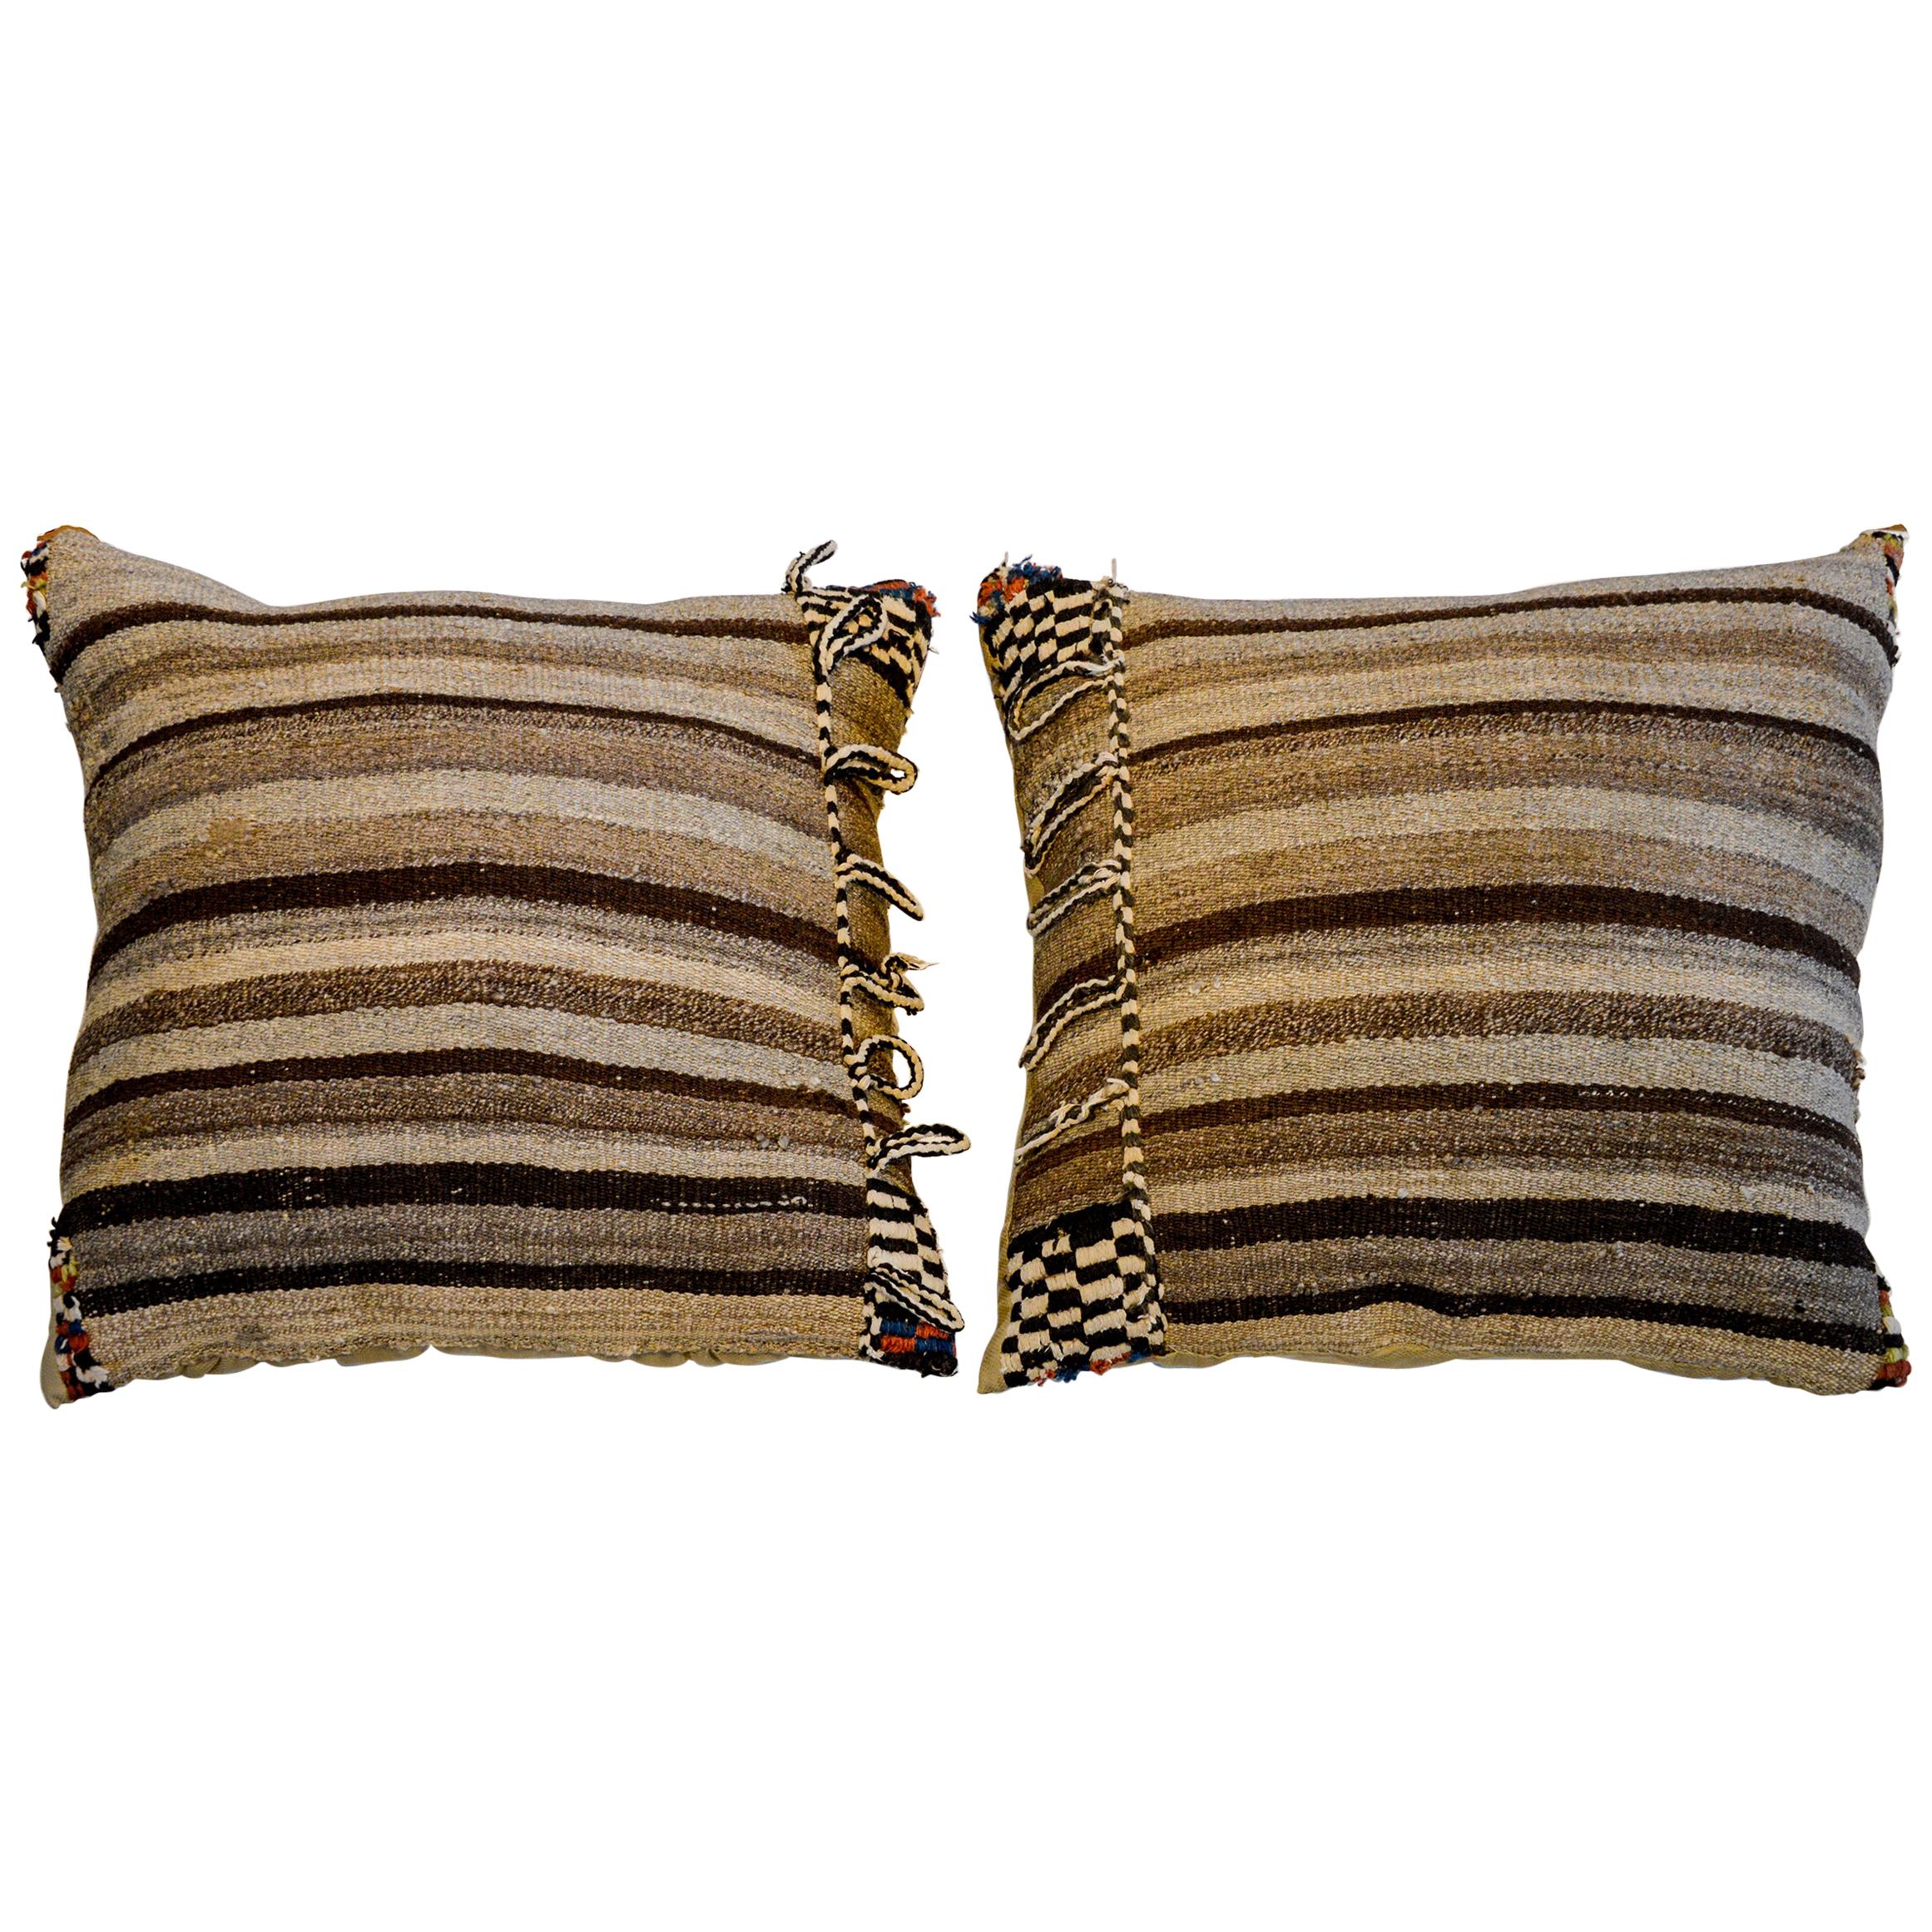 Pair of Early 20th Century Gabbeh Kilim Pillows